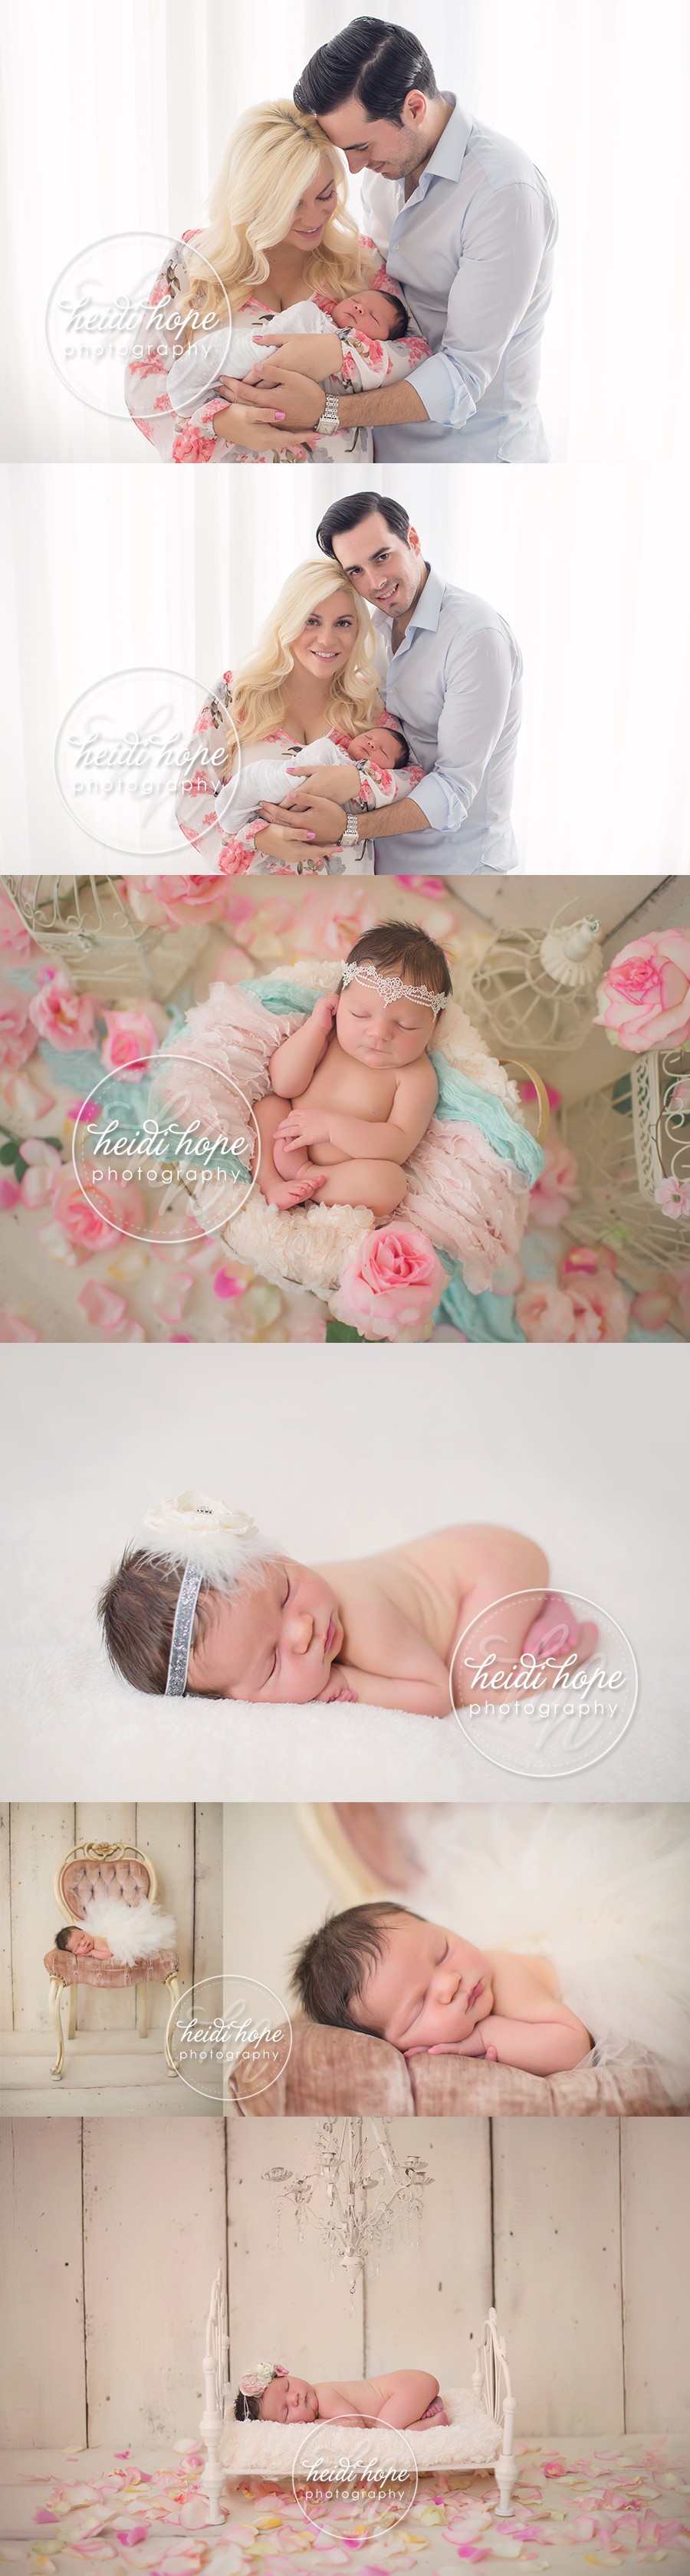 newborn baby girl with flowers